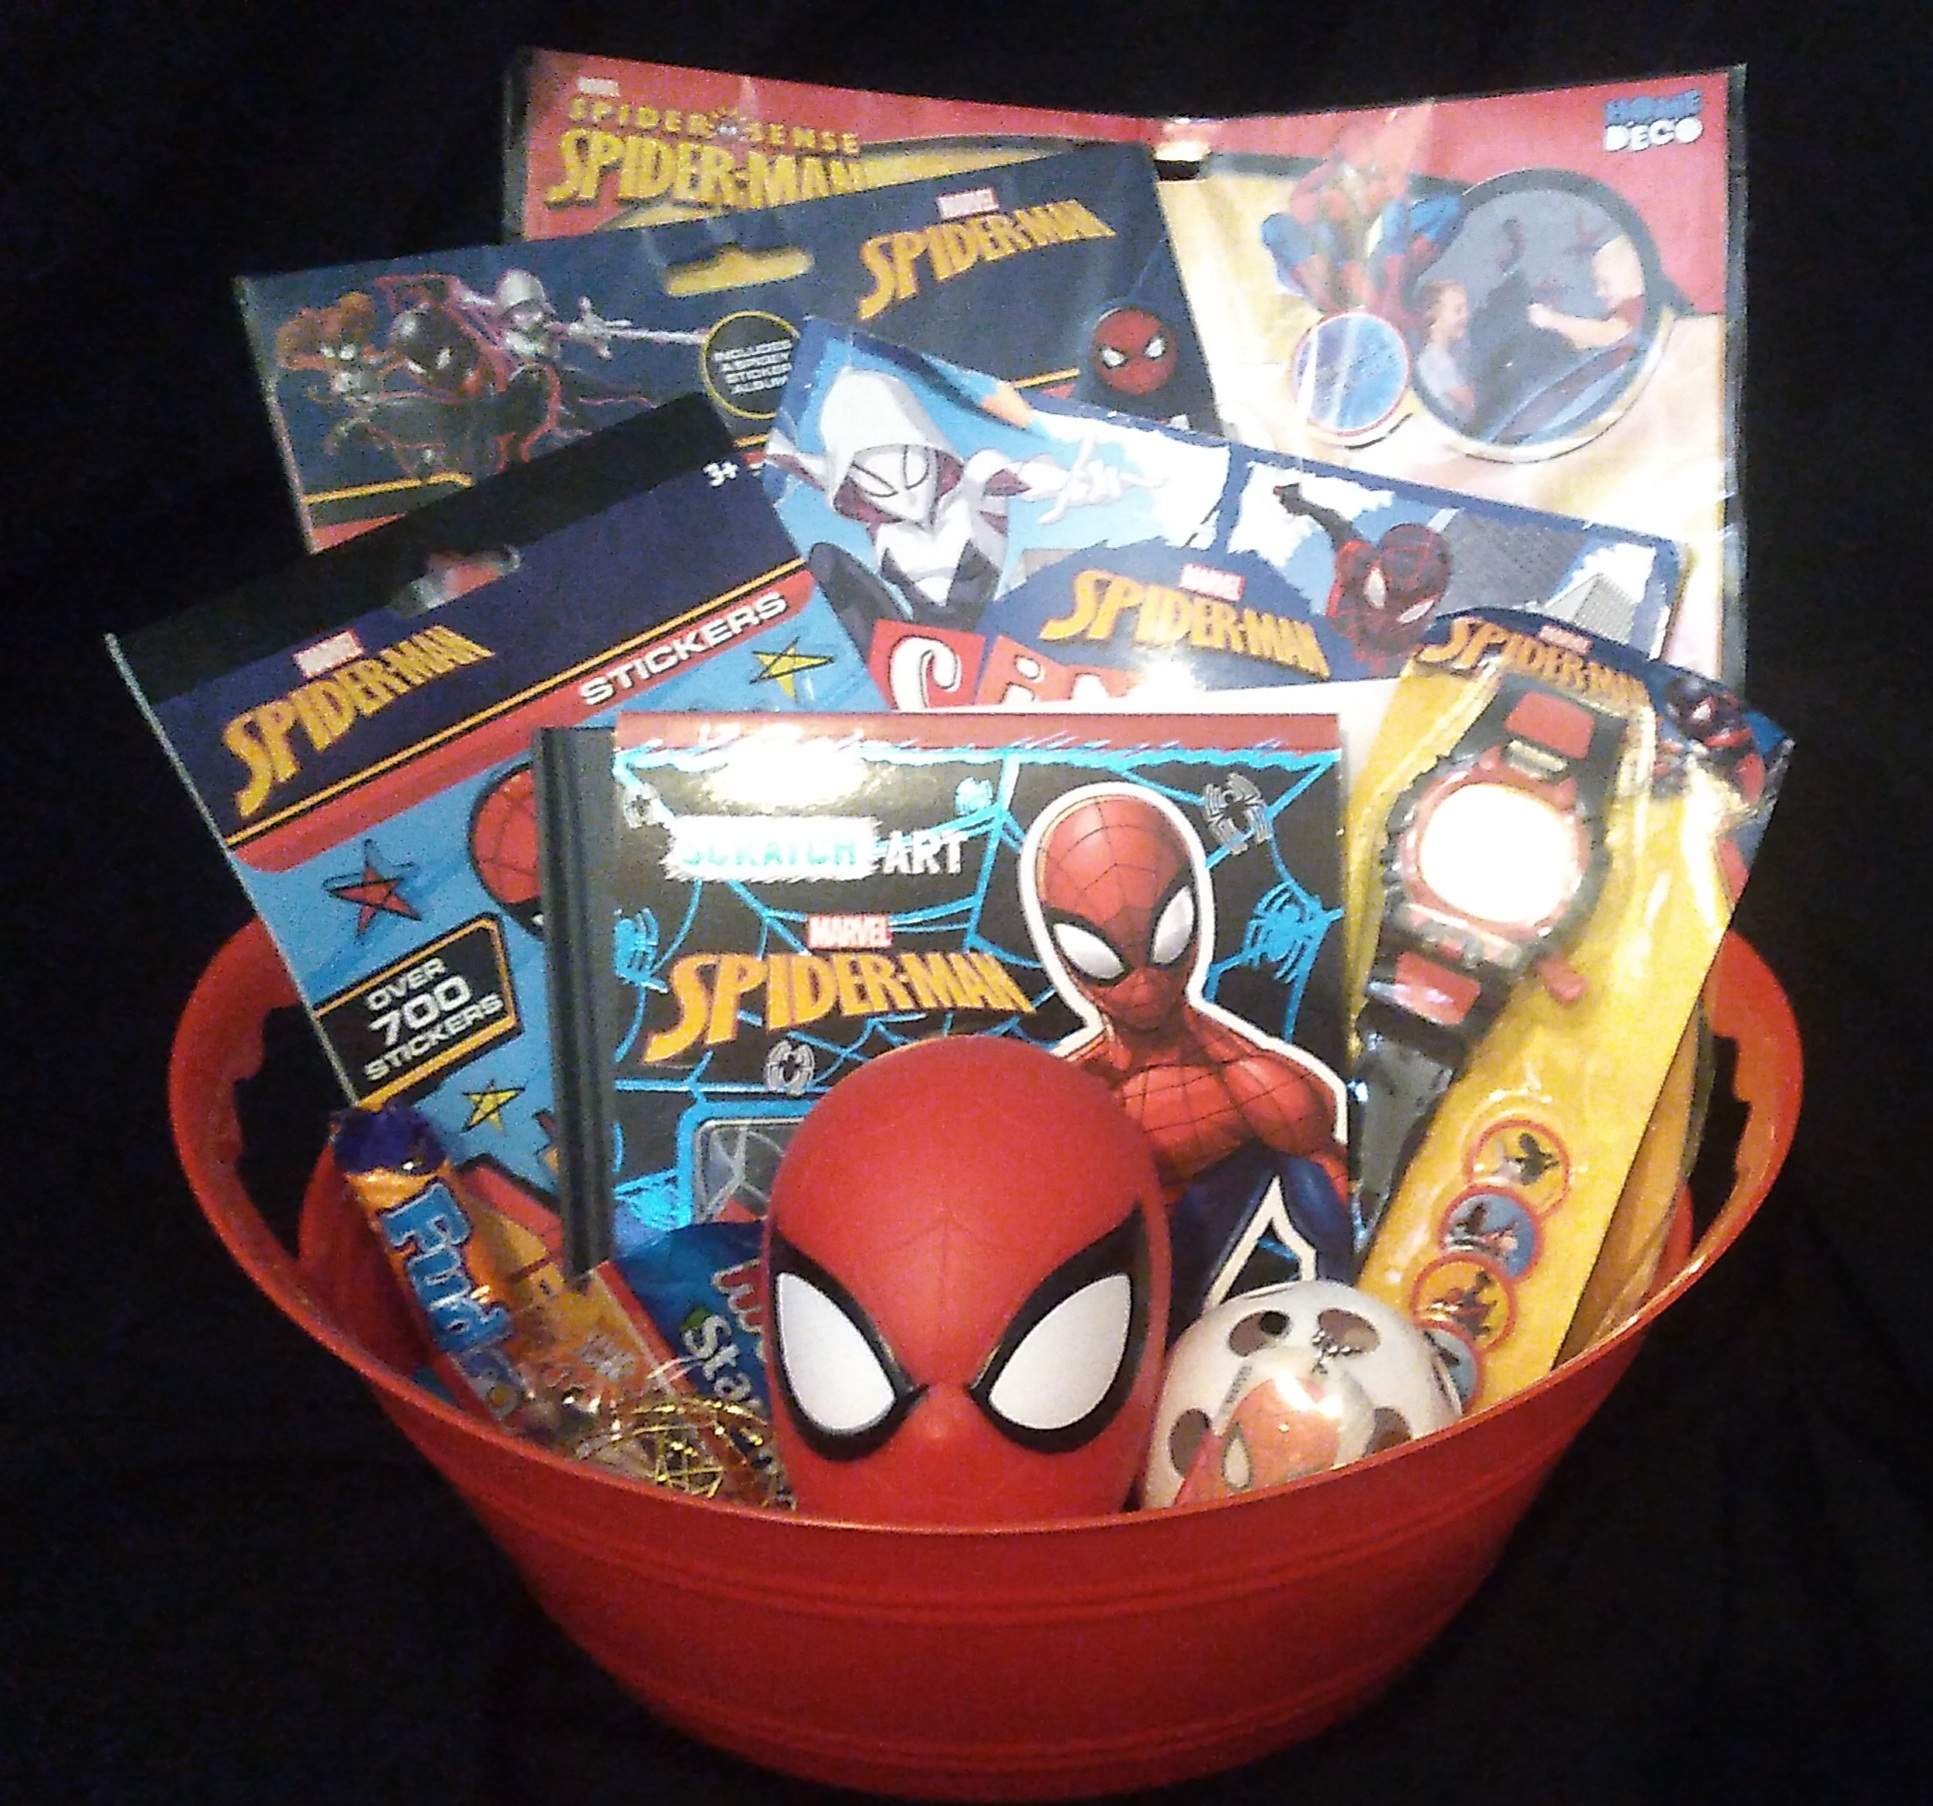 Mega Toy Bucket Spider-Man